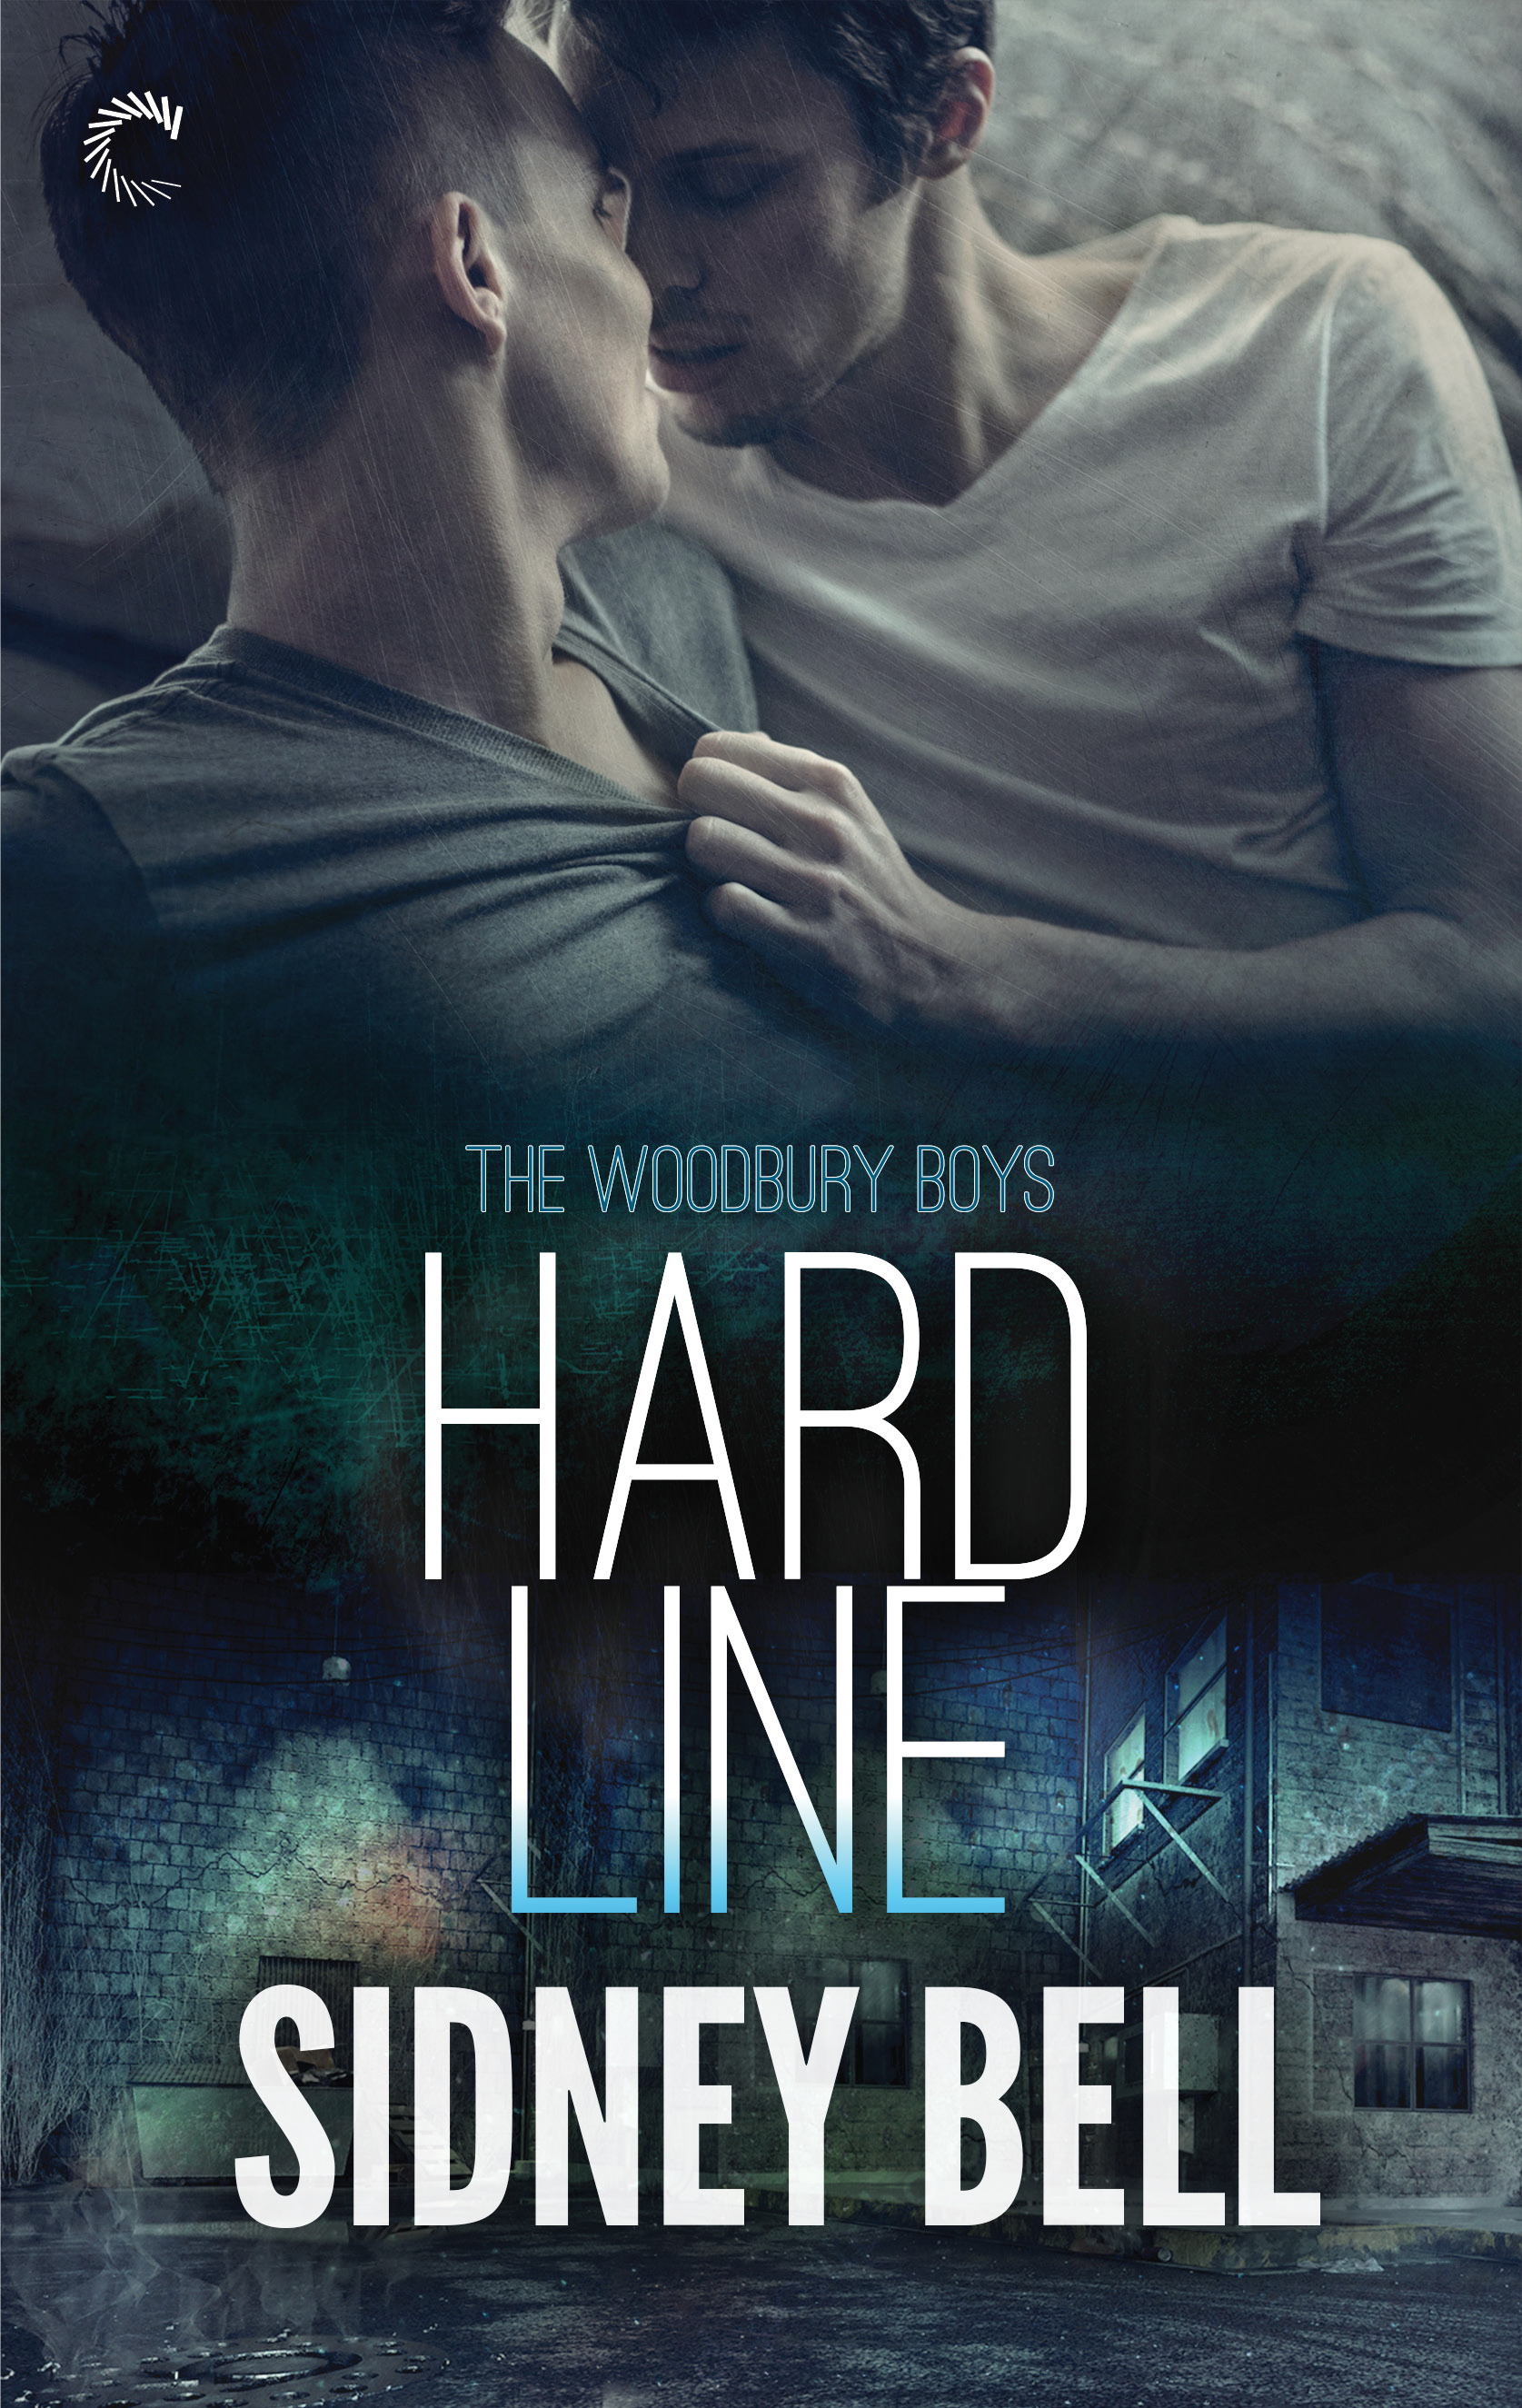 Hard Line